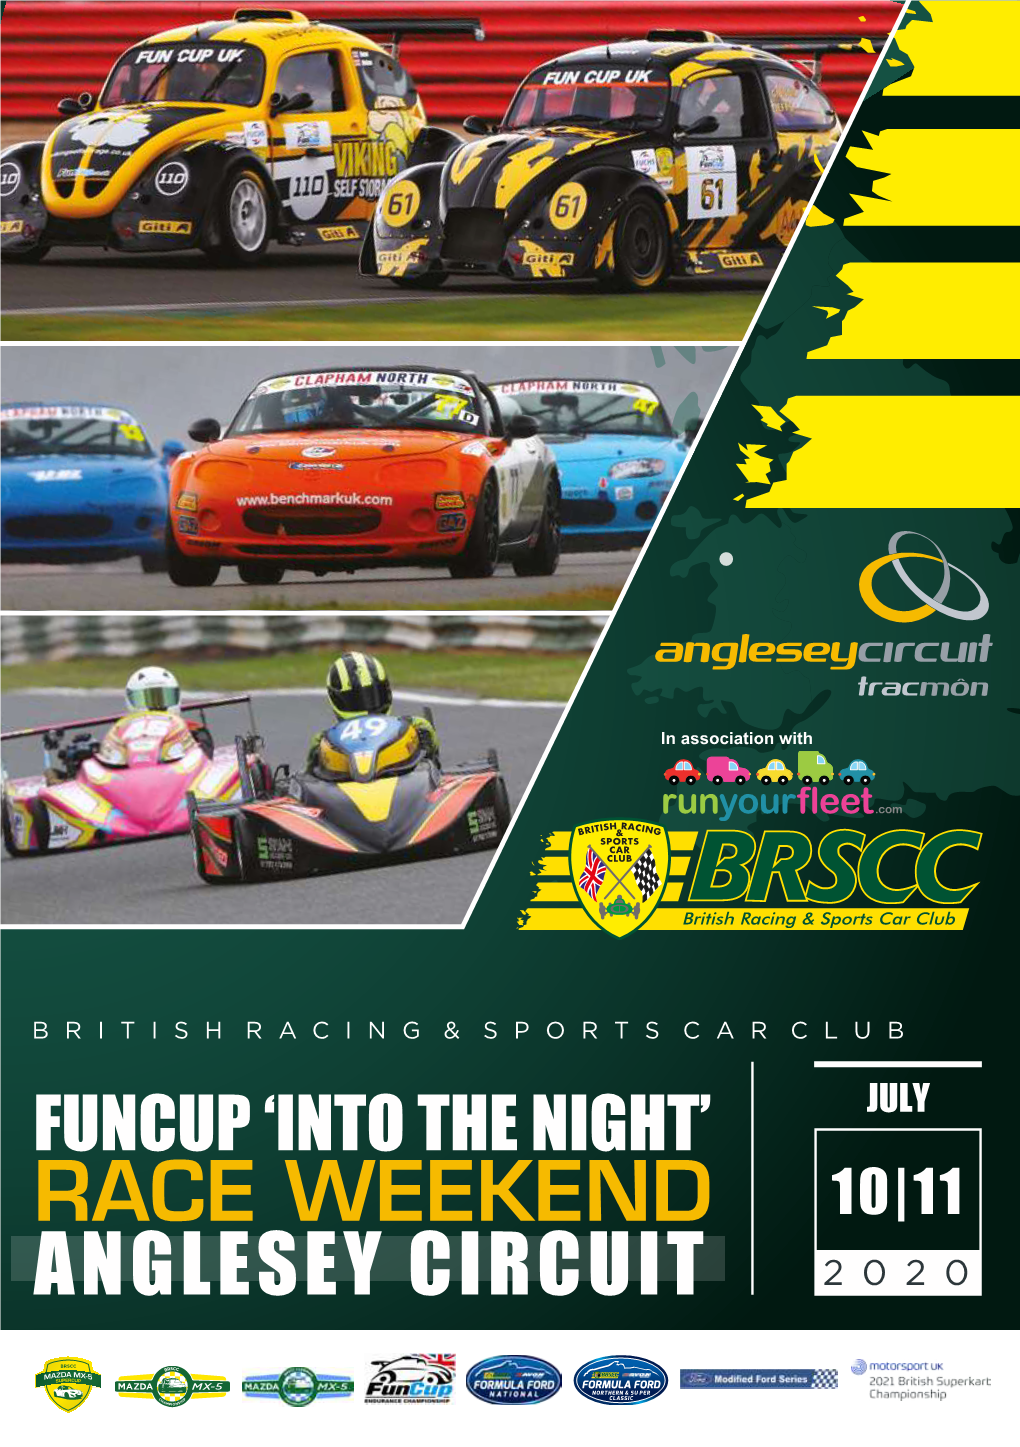 Race Weekend 10|11 Anglesey Circuit 2020